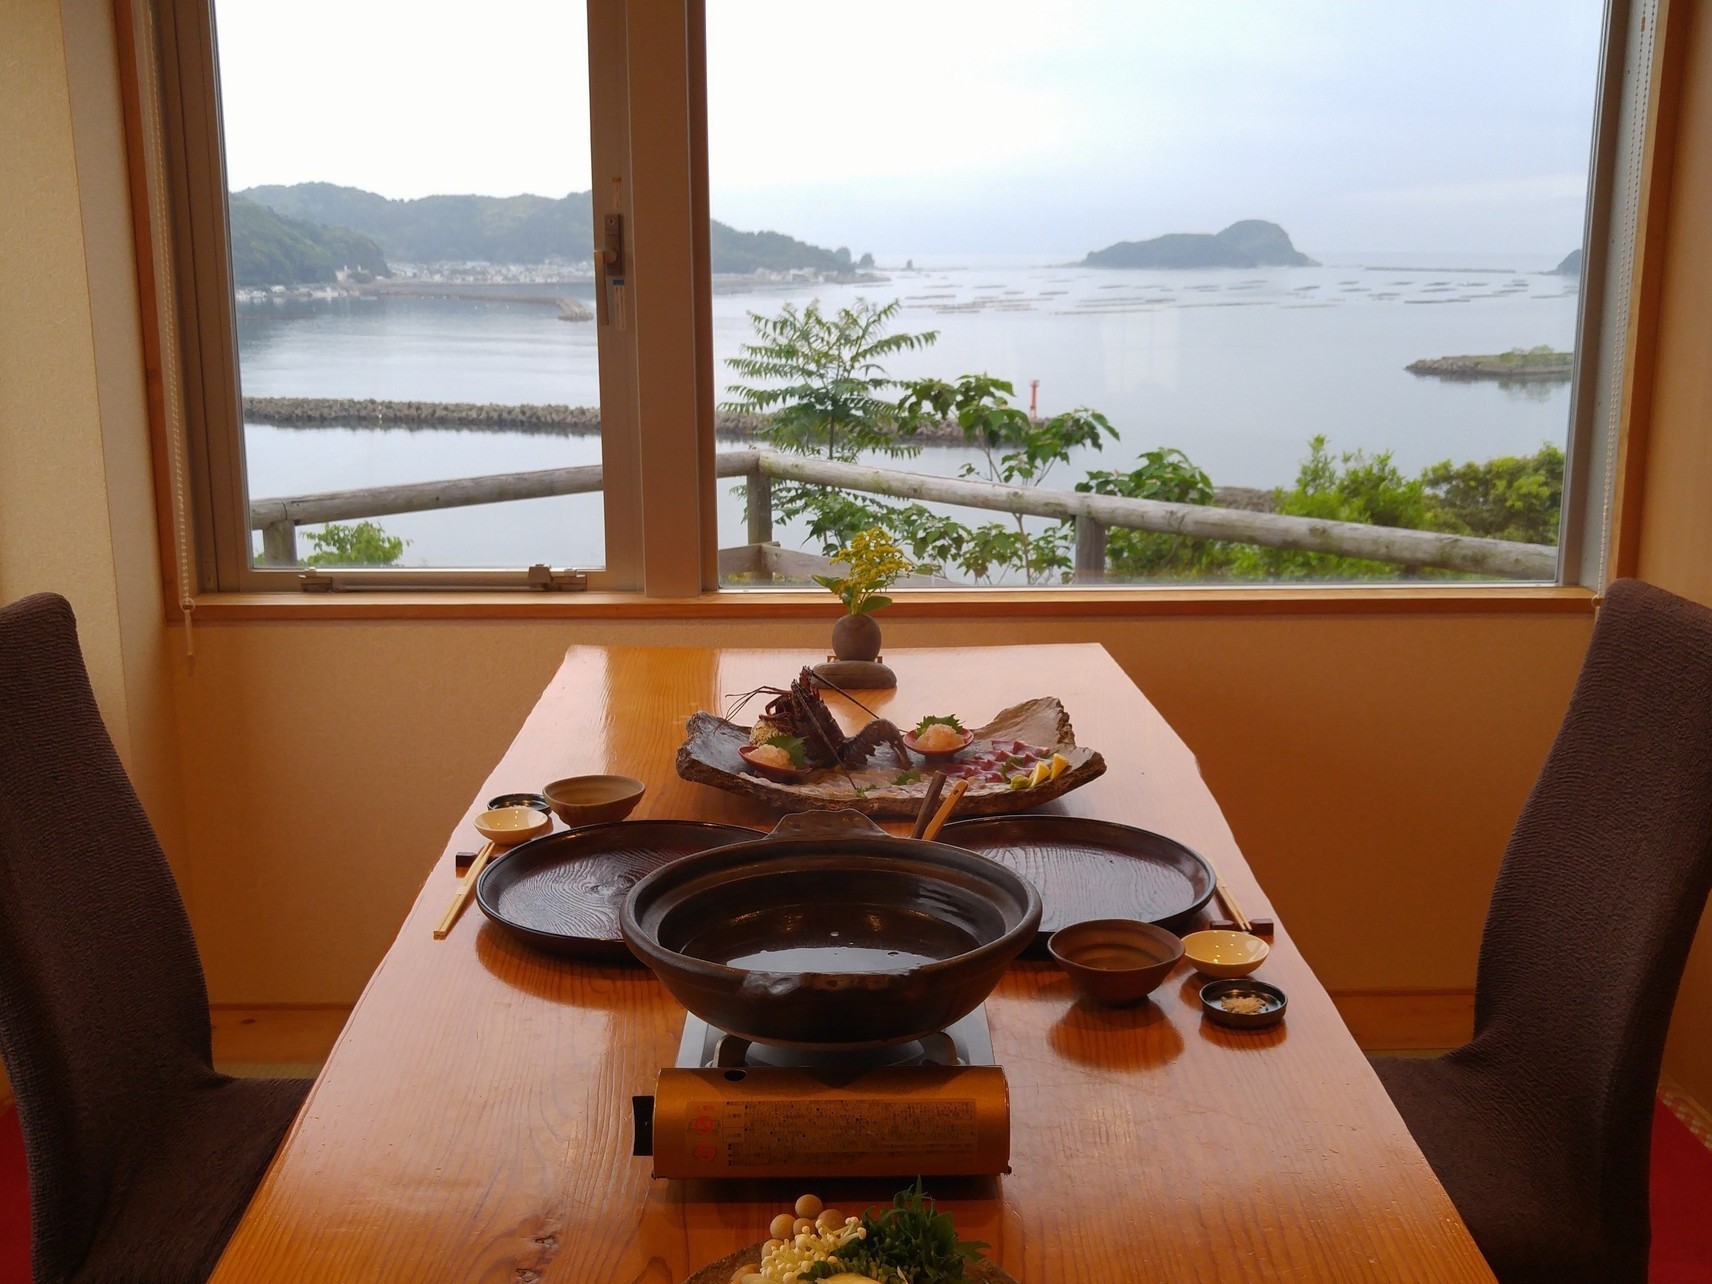 Takahiraya in the Heart of Nobeoka, Japan: Reviews on Takahiraya